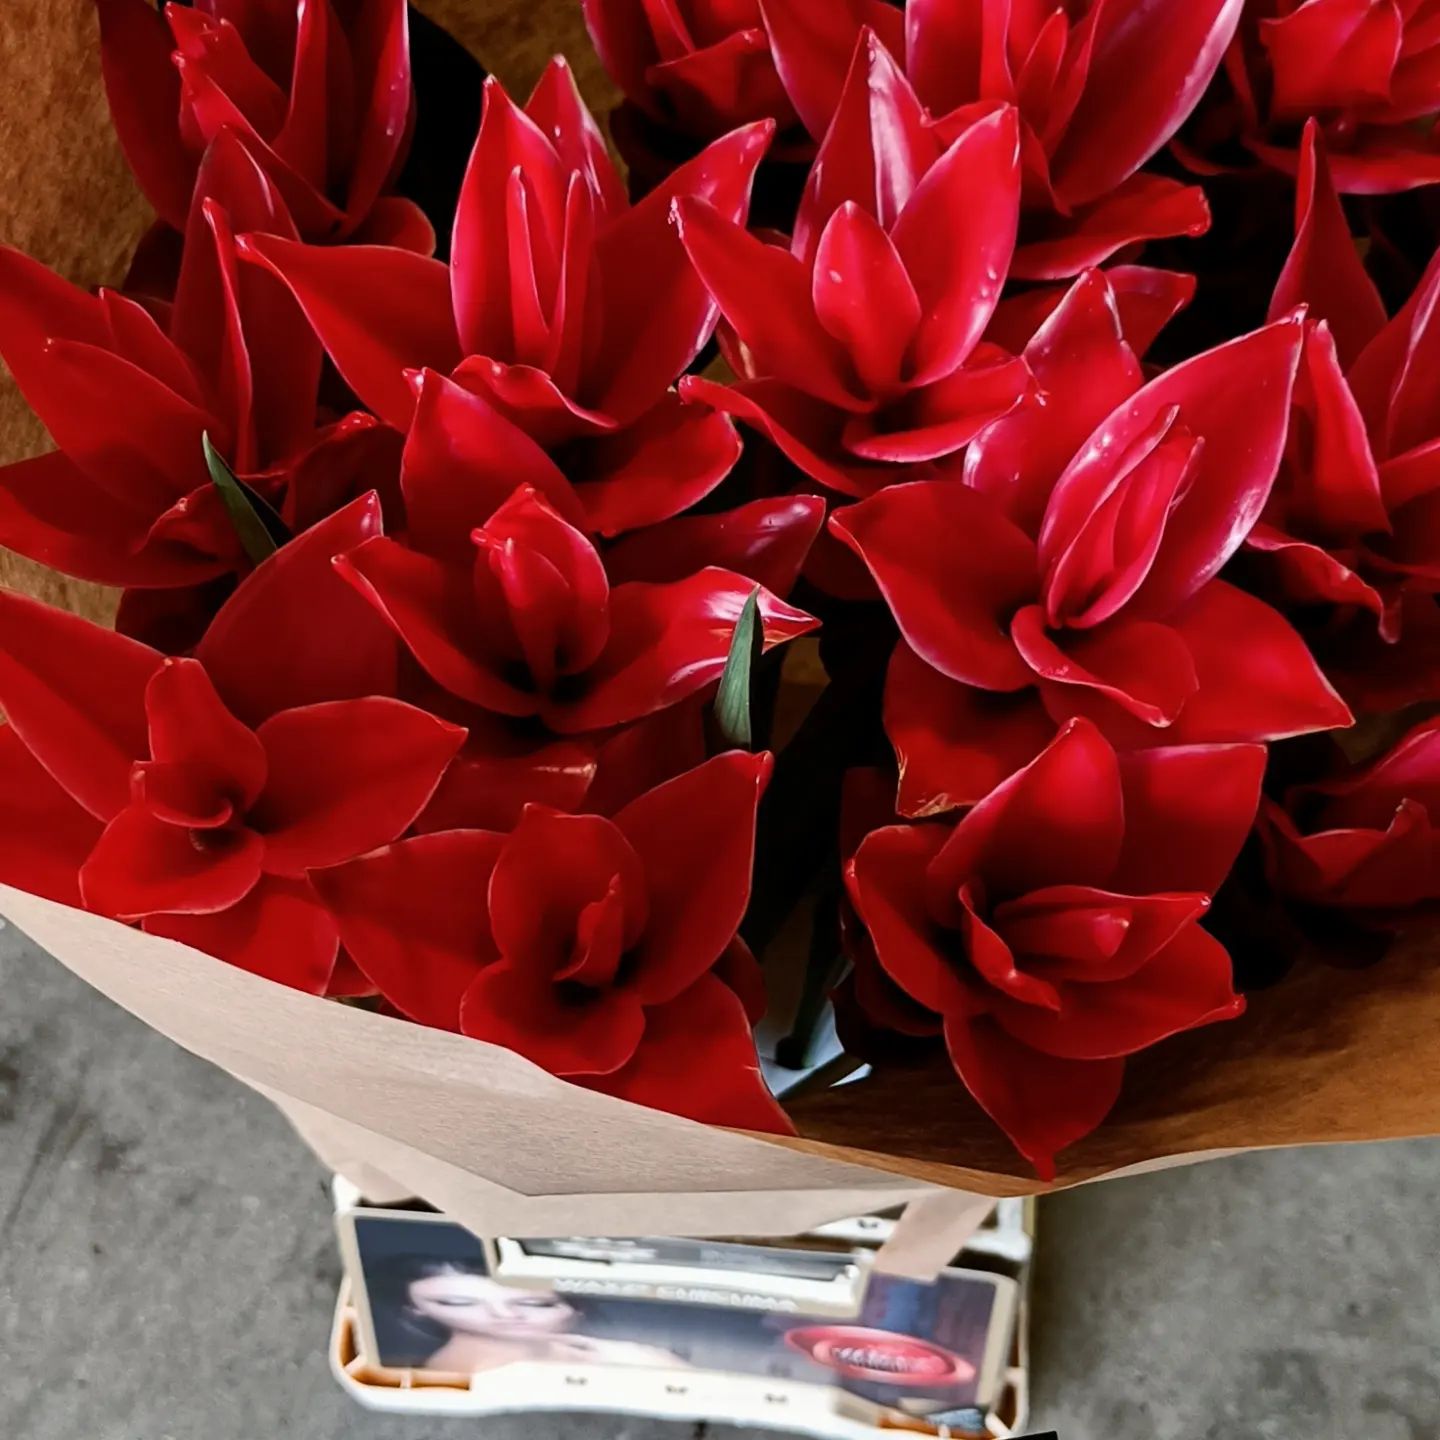 Waxed Cucuma cut flowers in red - on Thursd.